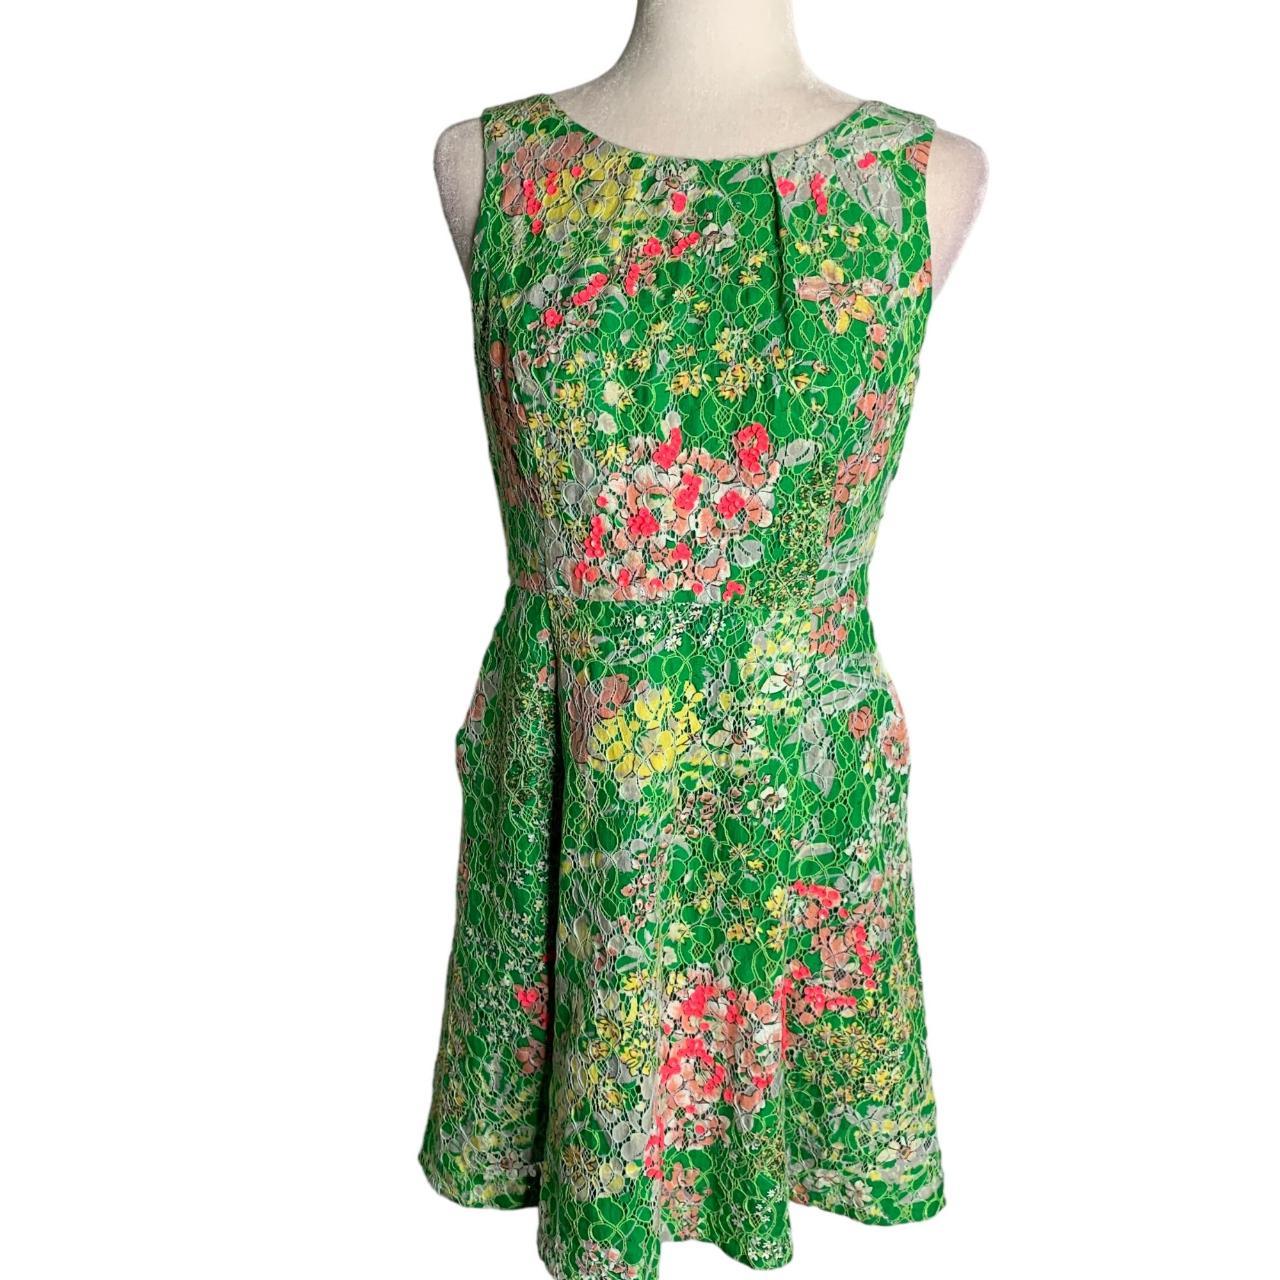 Maeve Anthropologie Lace Sequin Mini Dress 6P Green... - Depop